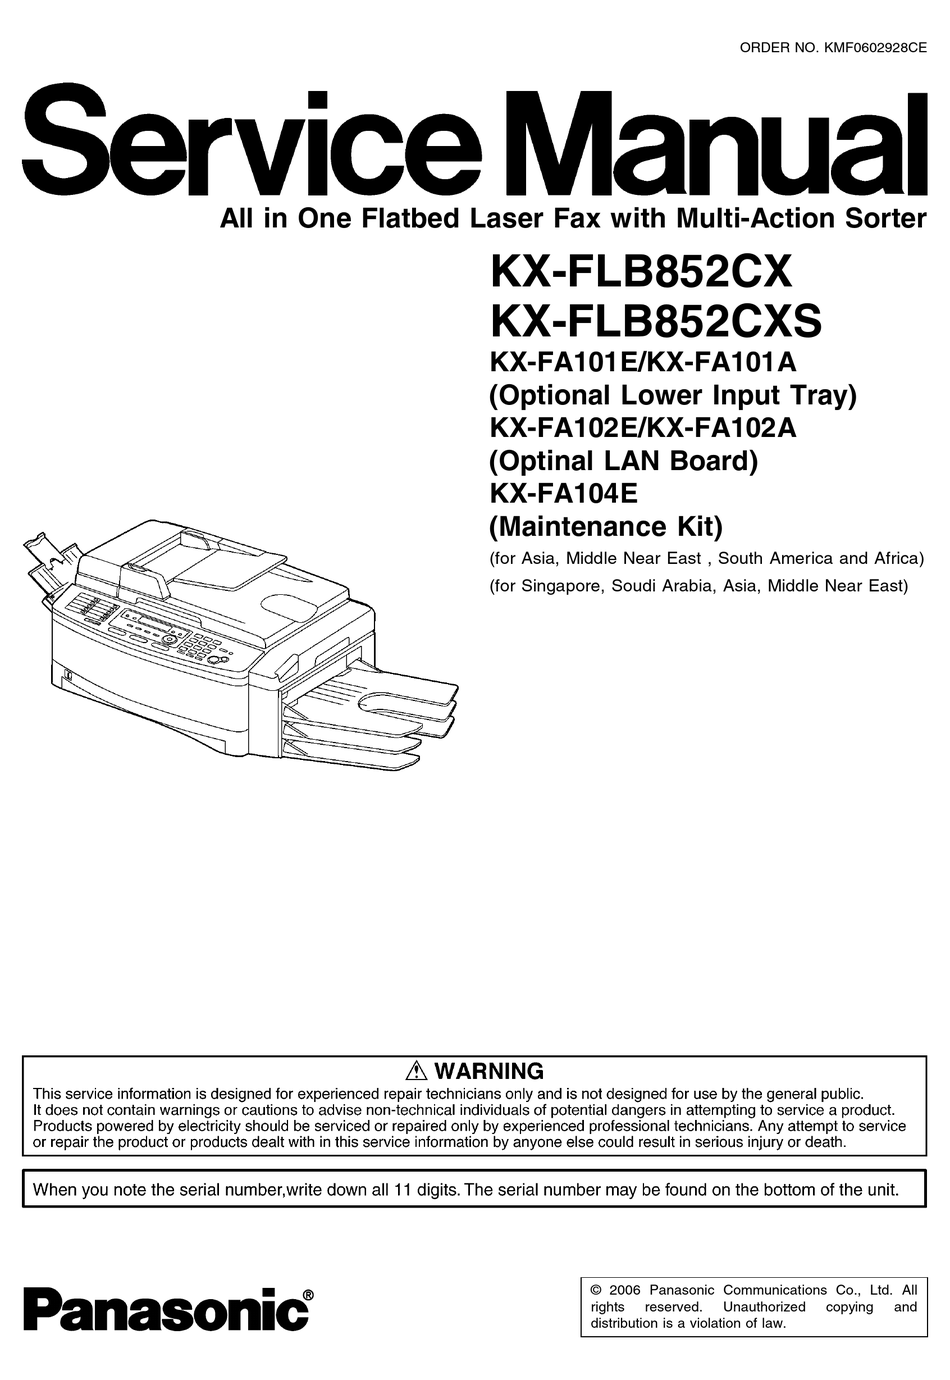 PANASONIC KX-FLB852CX SERVICE MANUAL Pdf Download | ManualsLib